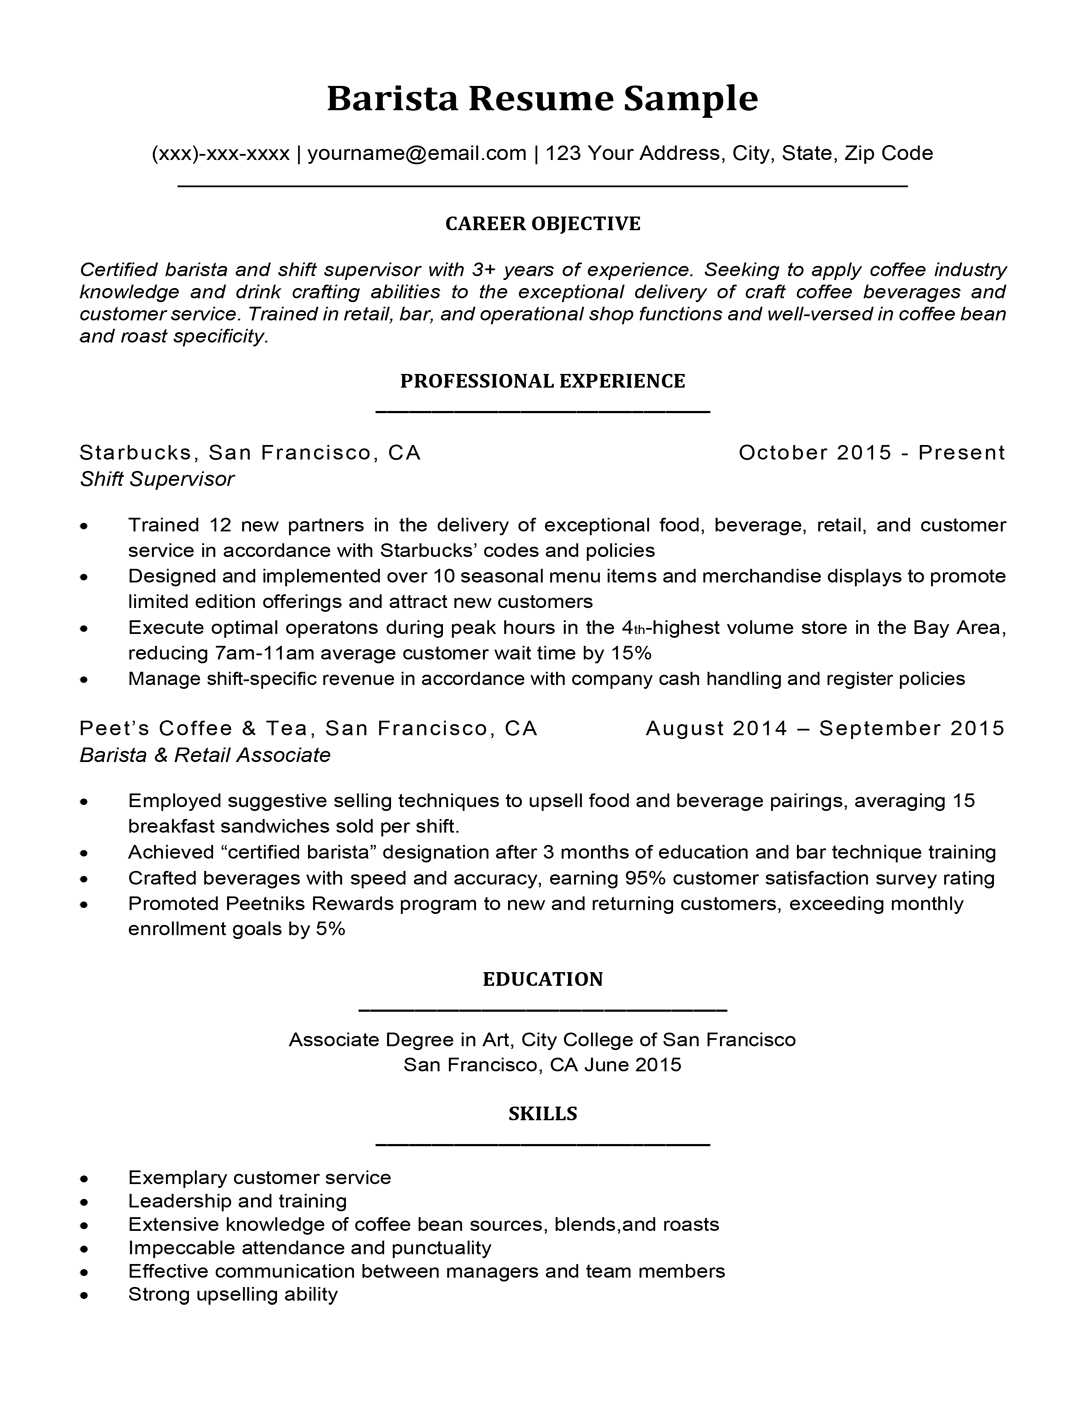 Barista resume sample